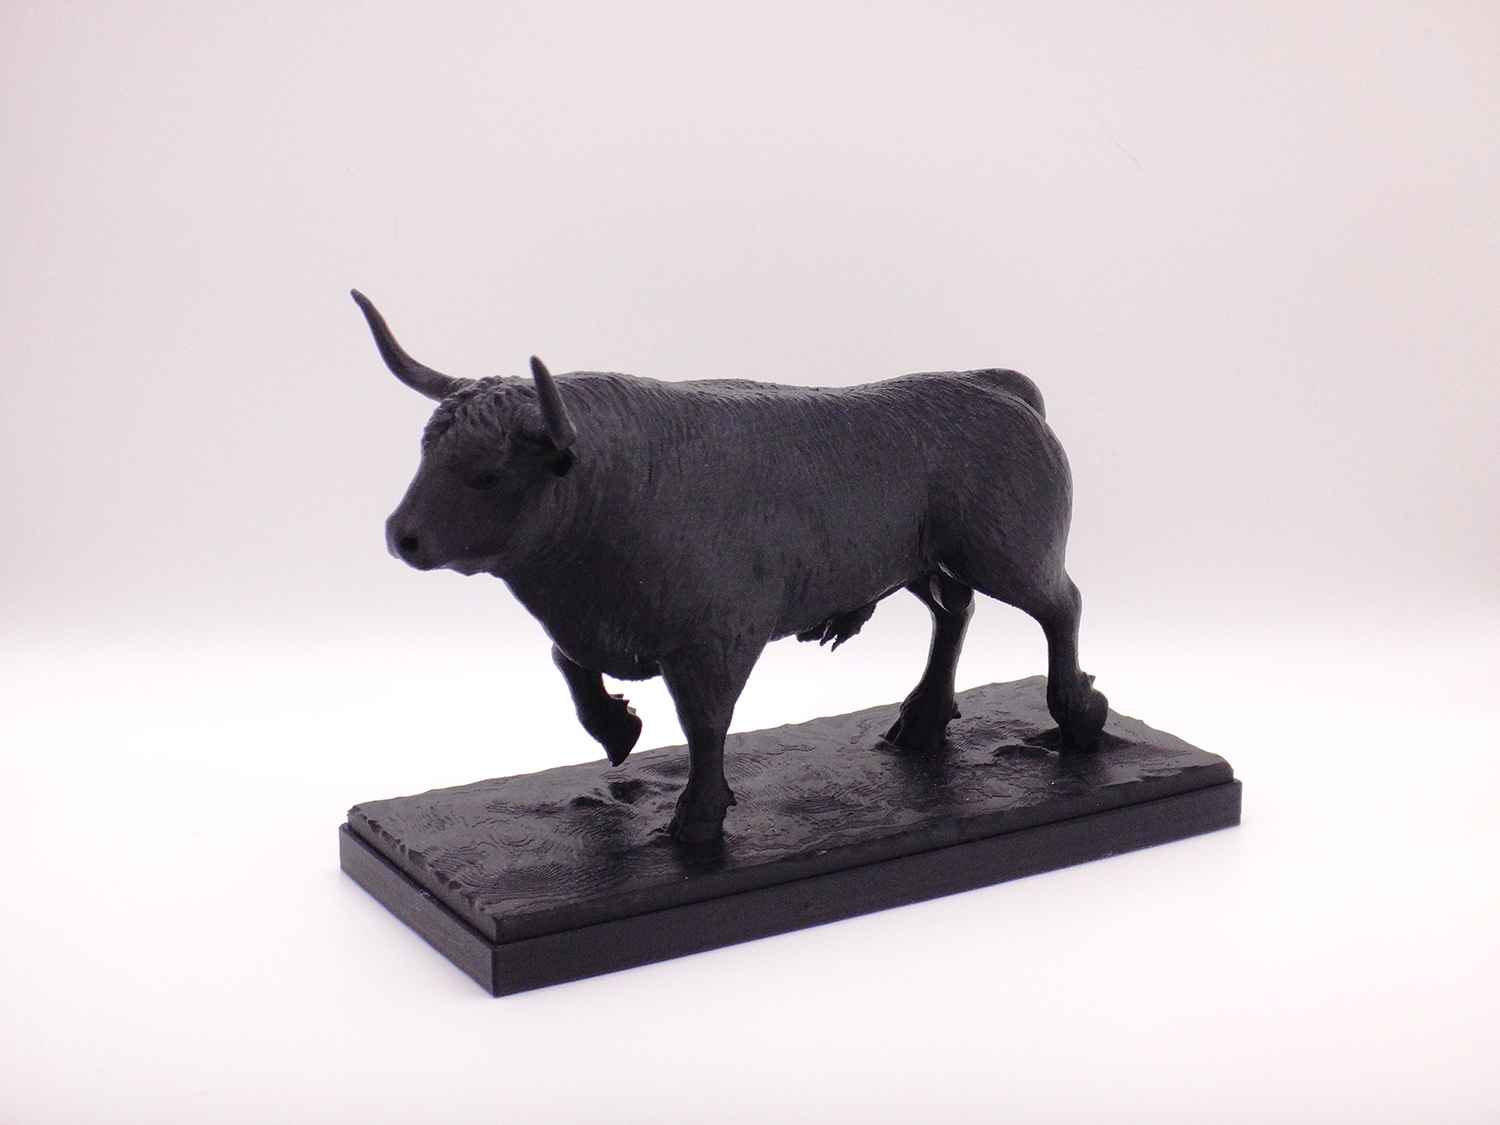 3D Printed Bull Statuette. 3D printing on demand.